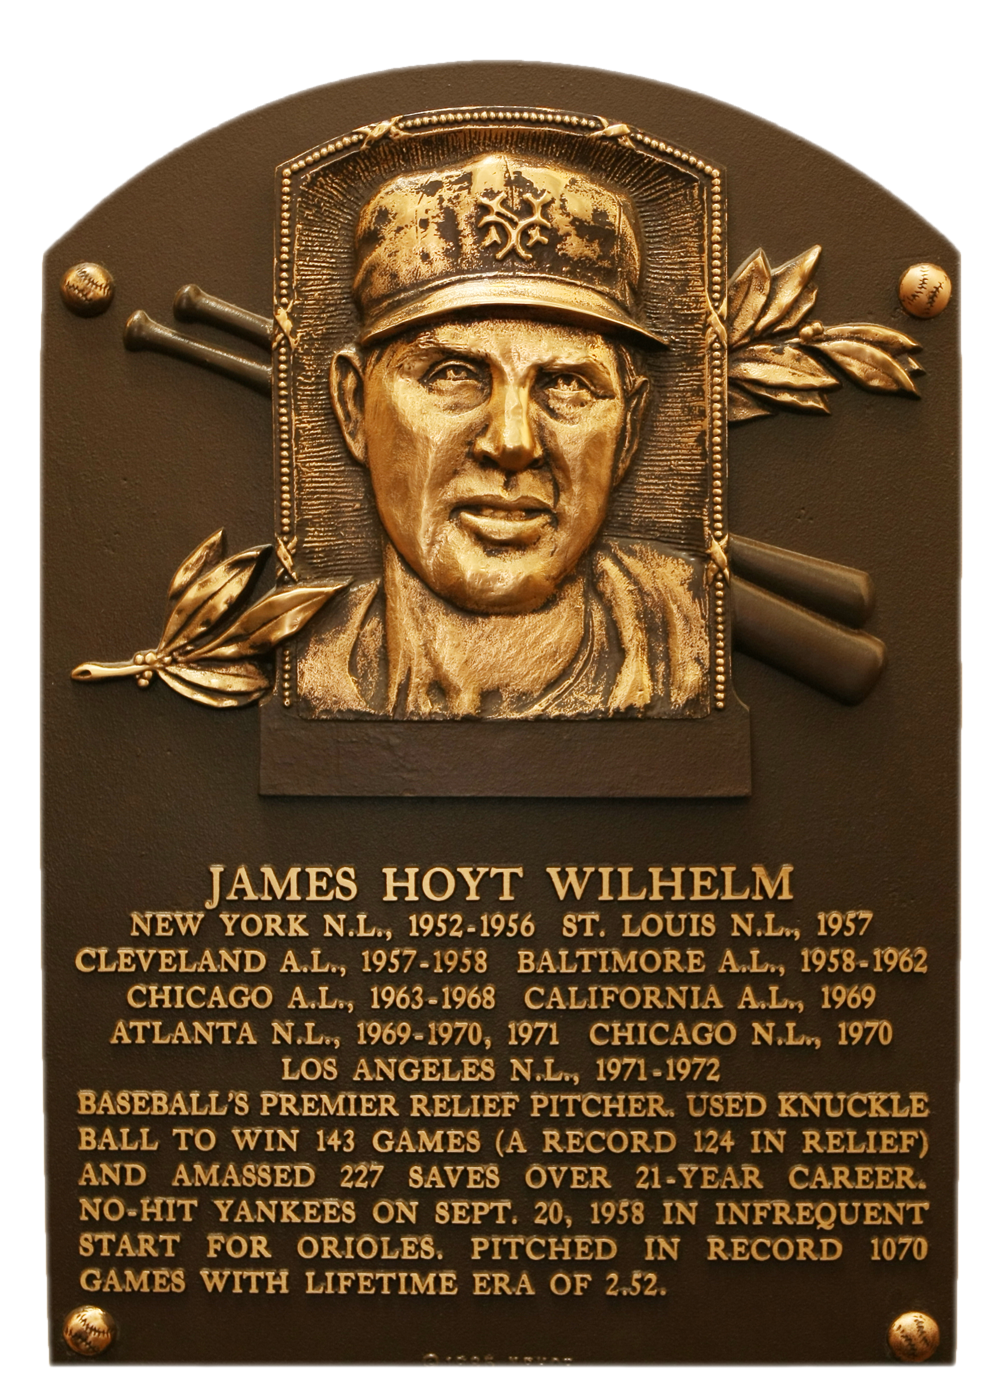 Hoyt Wilhelm Hall of Fame plaque